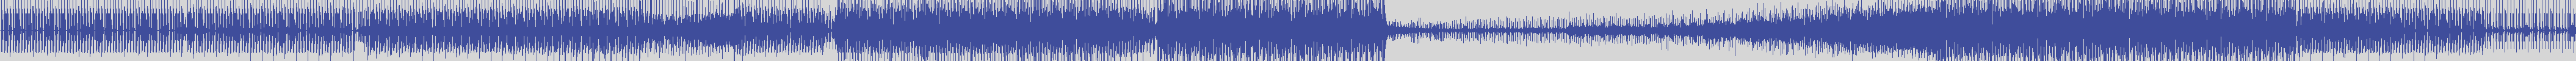 atomic_recordings [AR021] Alex Di Stefano - Laguna [Original Mix] audio wave form